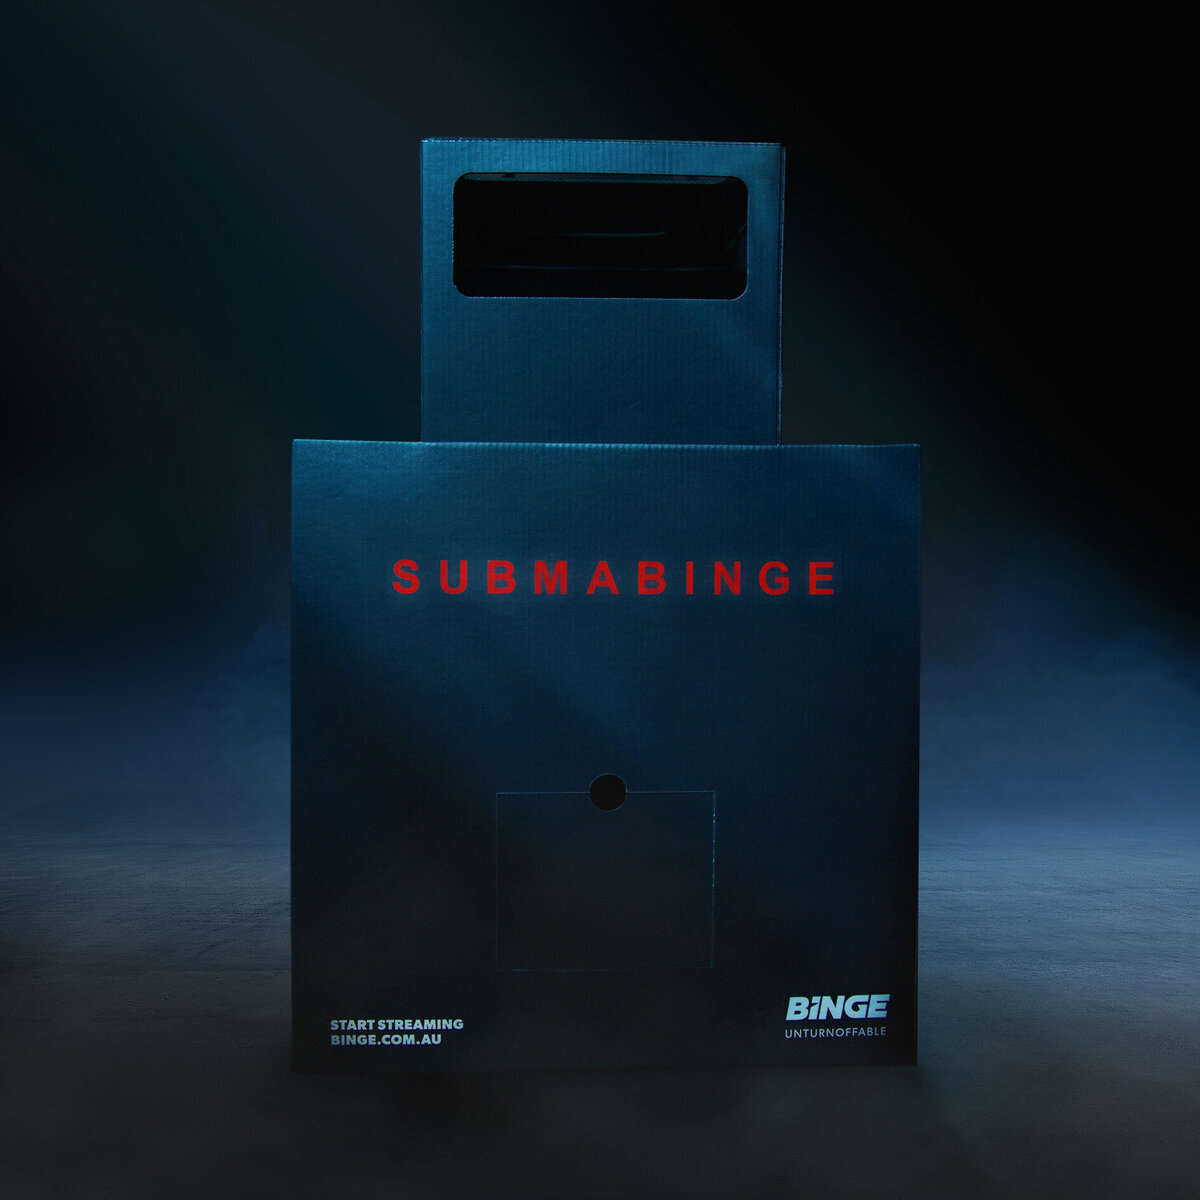 Submabinge (Binge) Influencer Kit